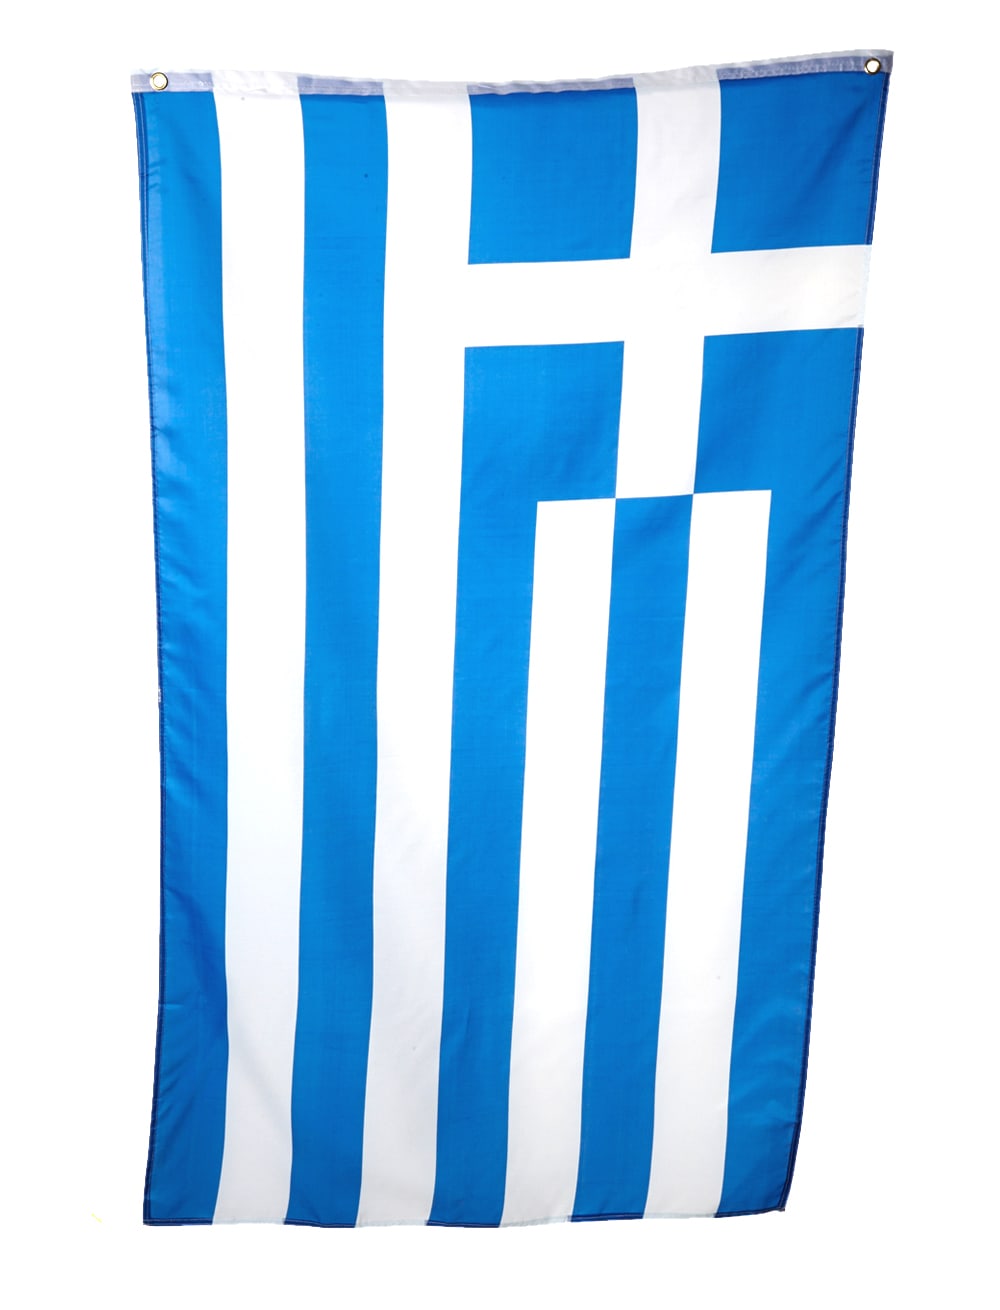 Flagge Griechenland 150x90cm